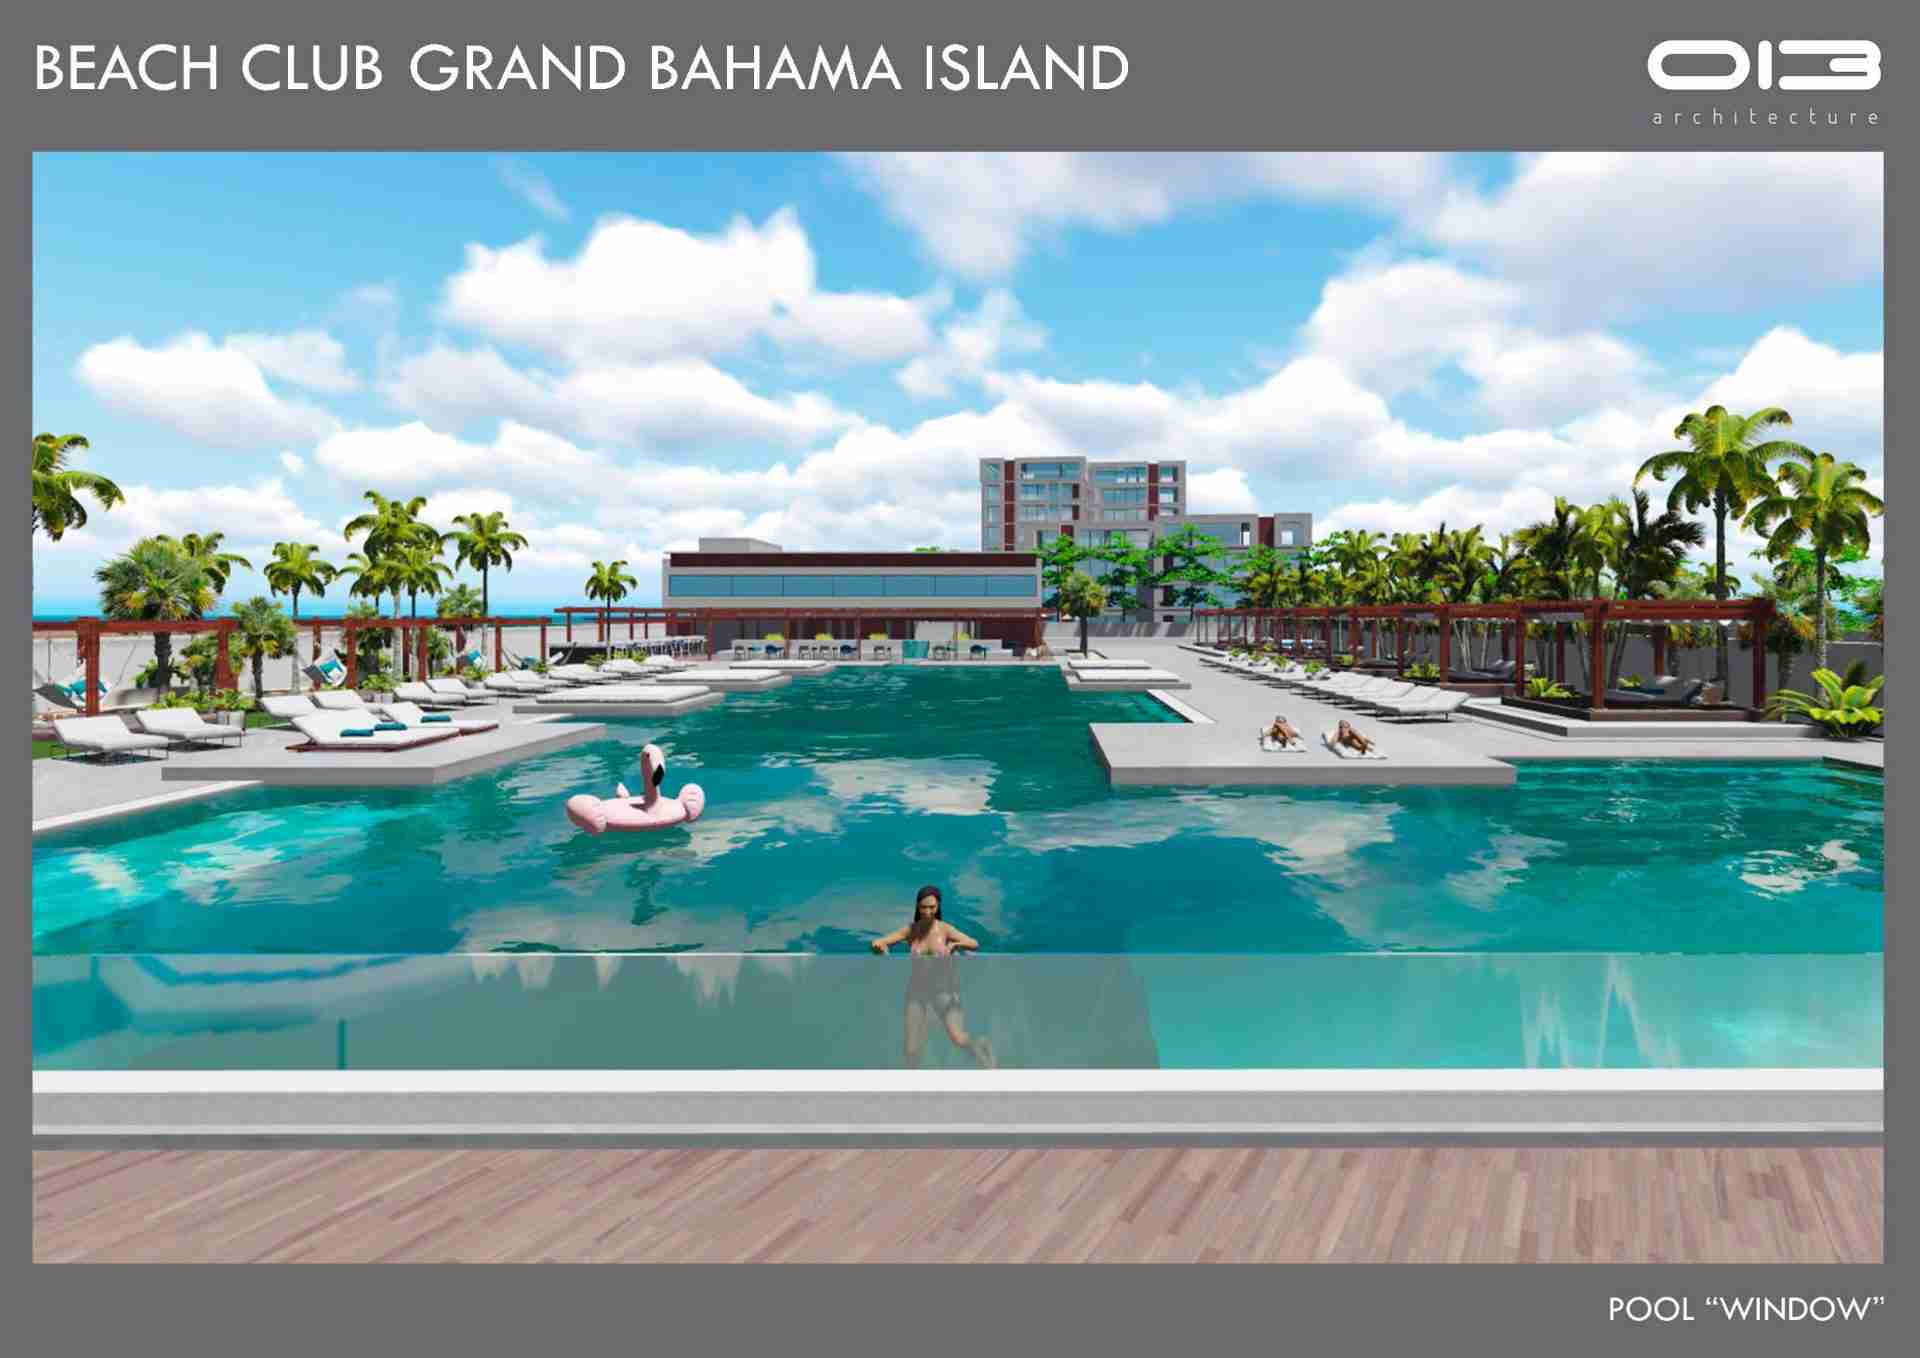 beach-club-grand-bahama-island-oib-architecture-page-15-scaled